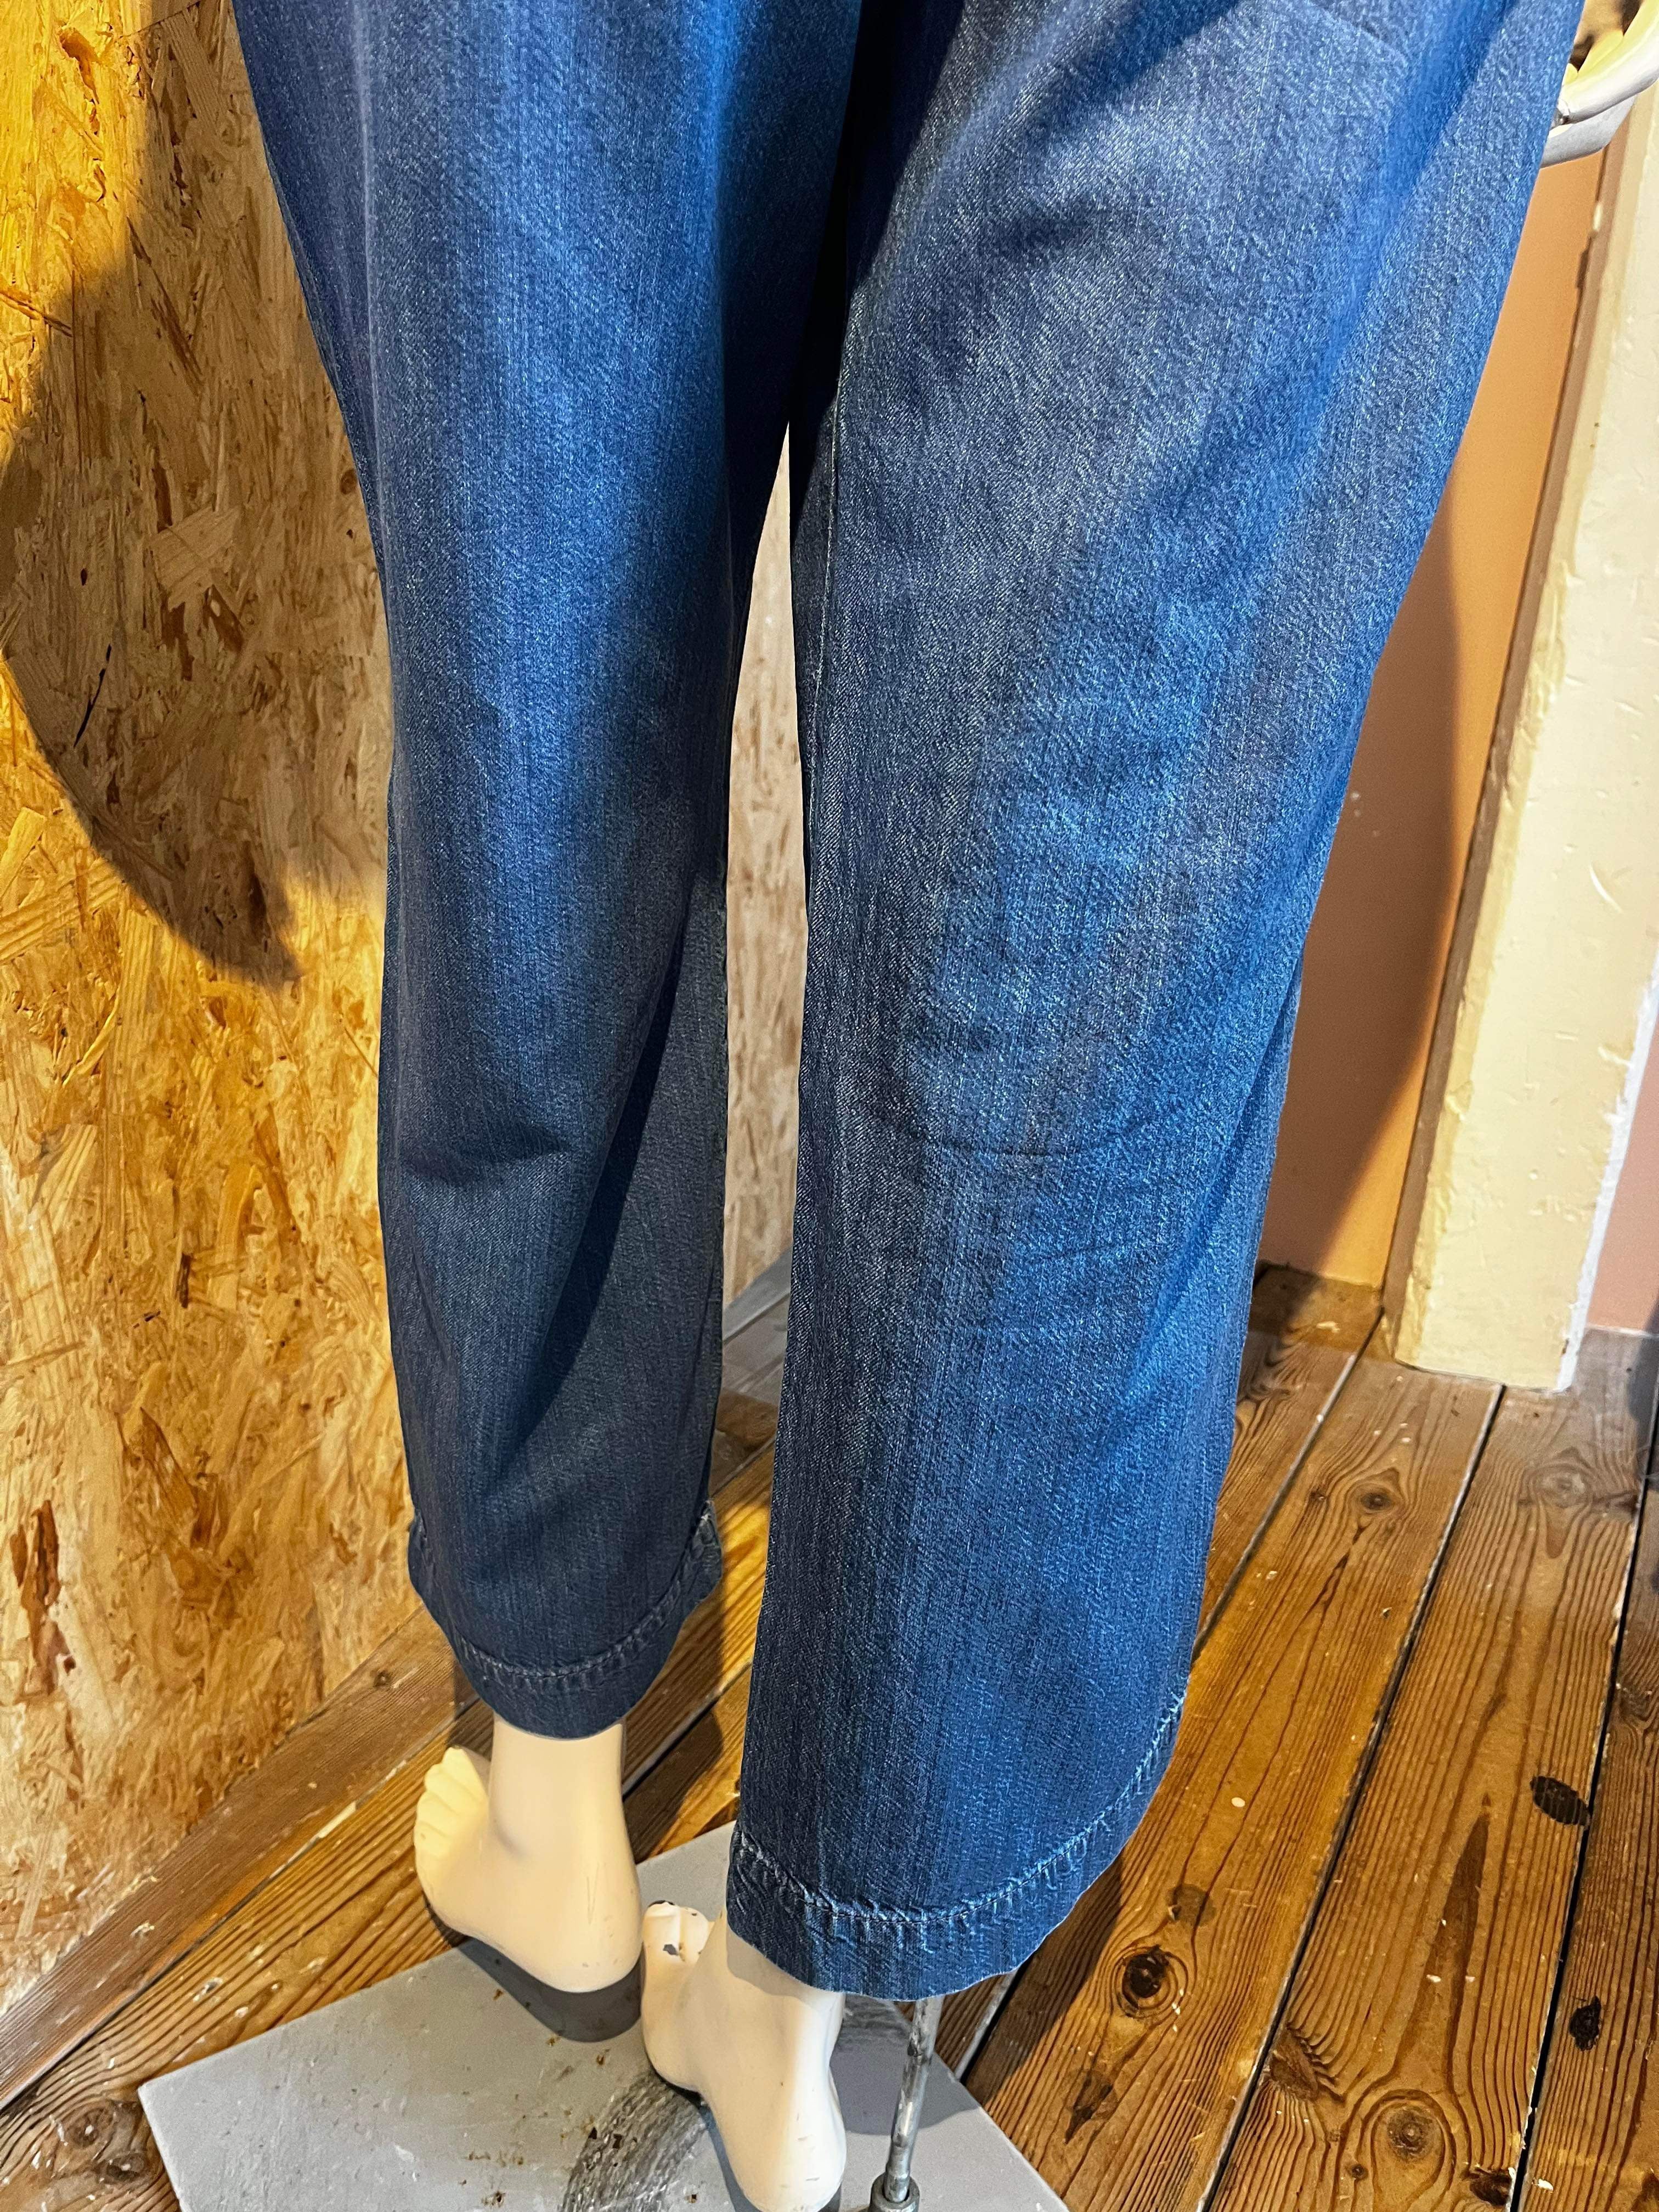 Lee - Jeans - Size: 31/33